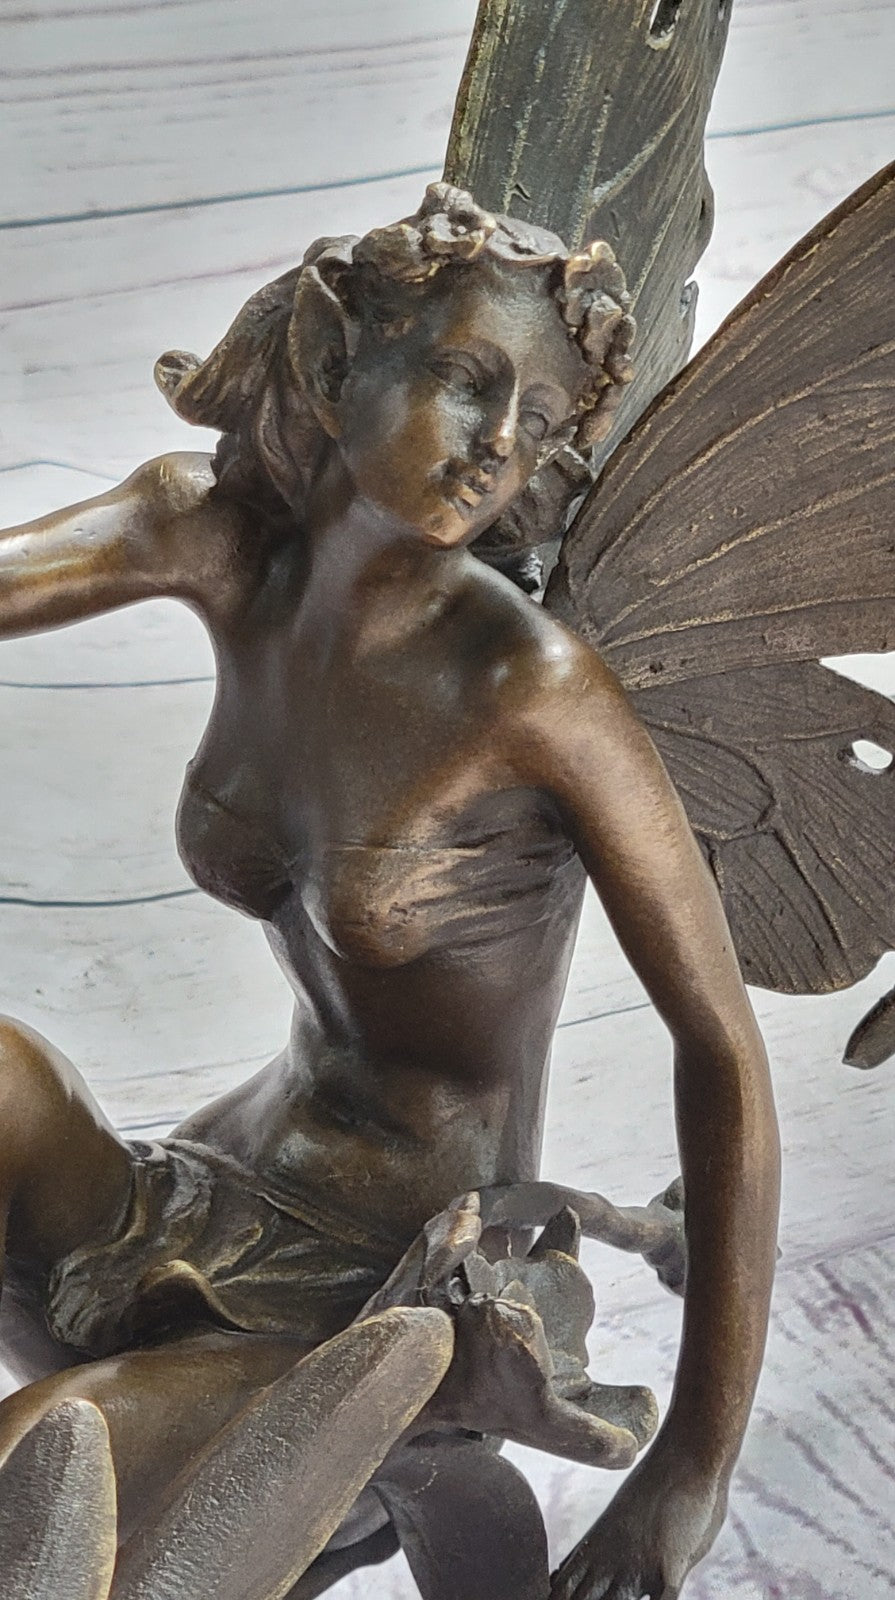 Original Sign Fantasy Fairy Bronze Sculpture Figurine Art Figure Statue Hot Cast